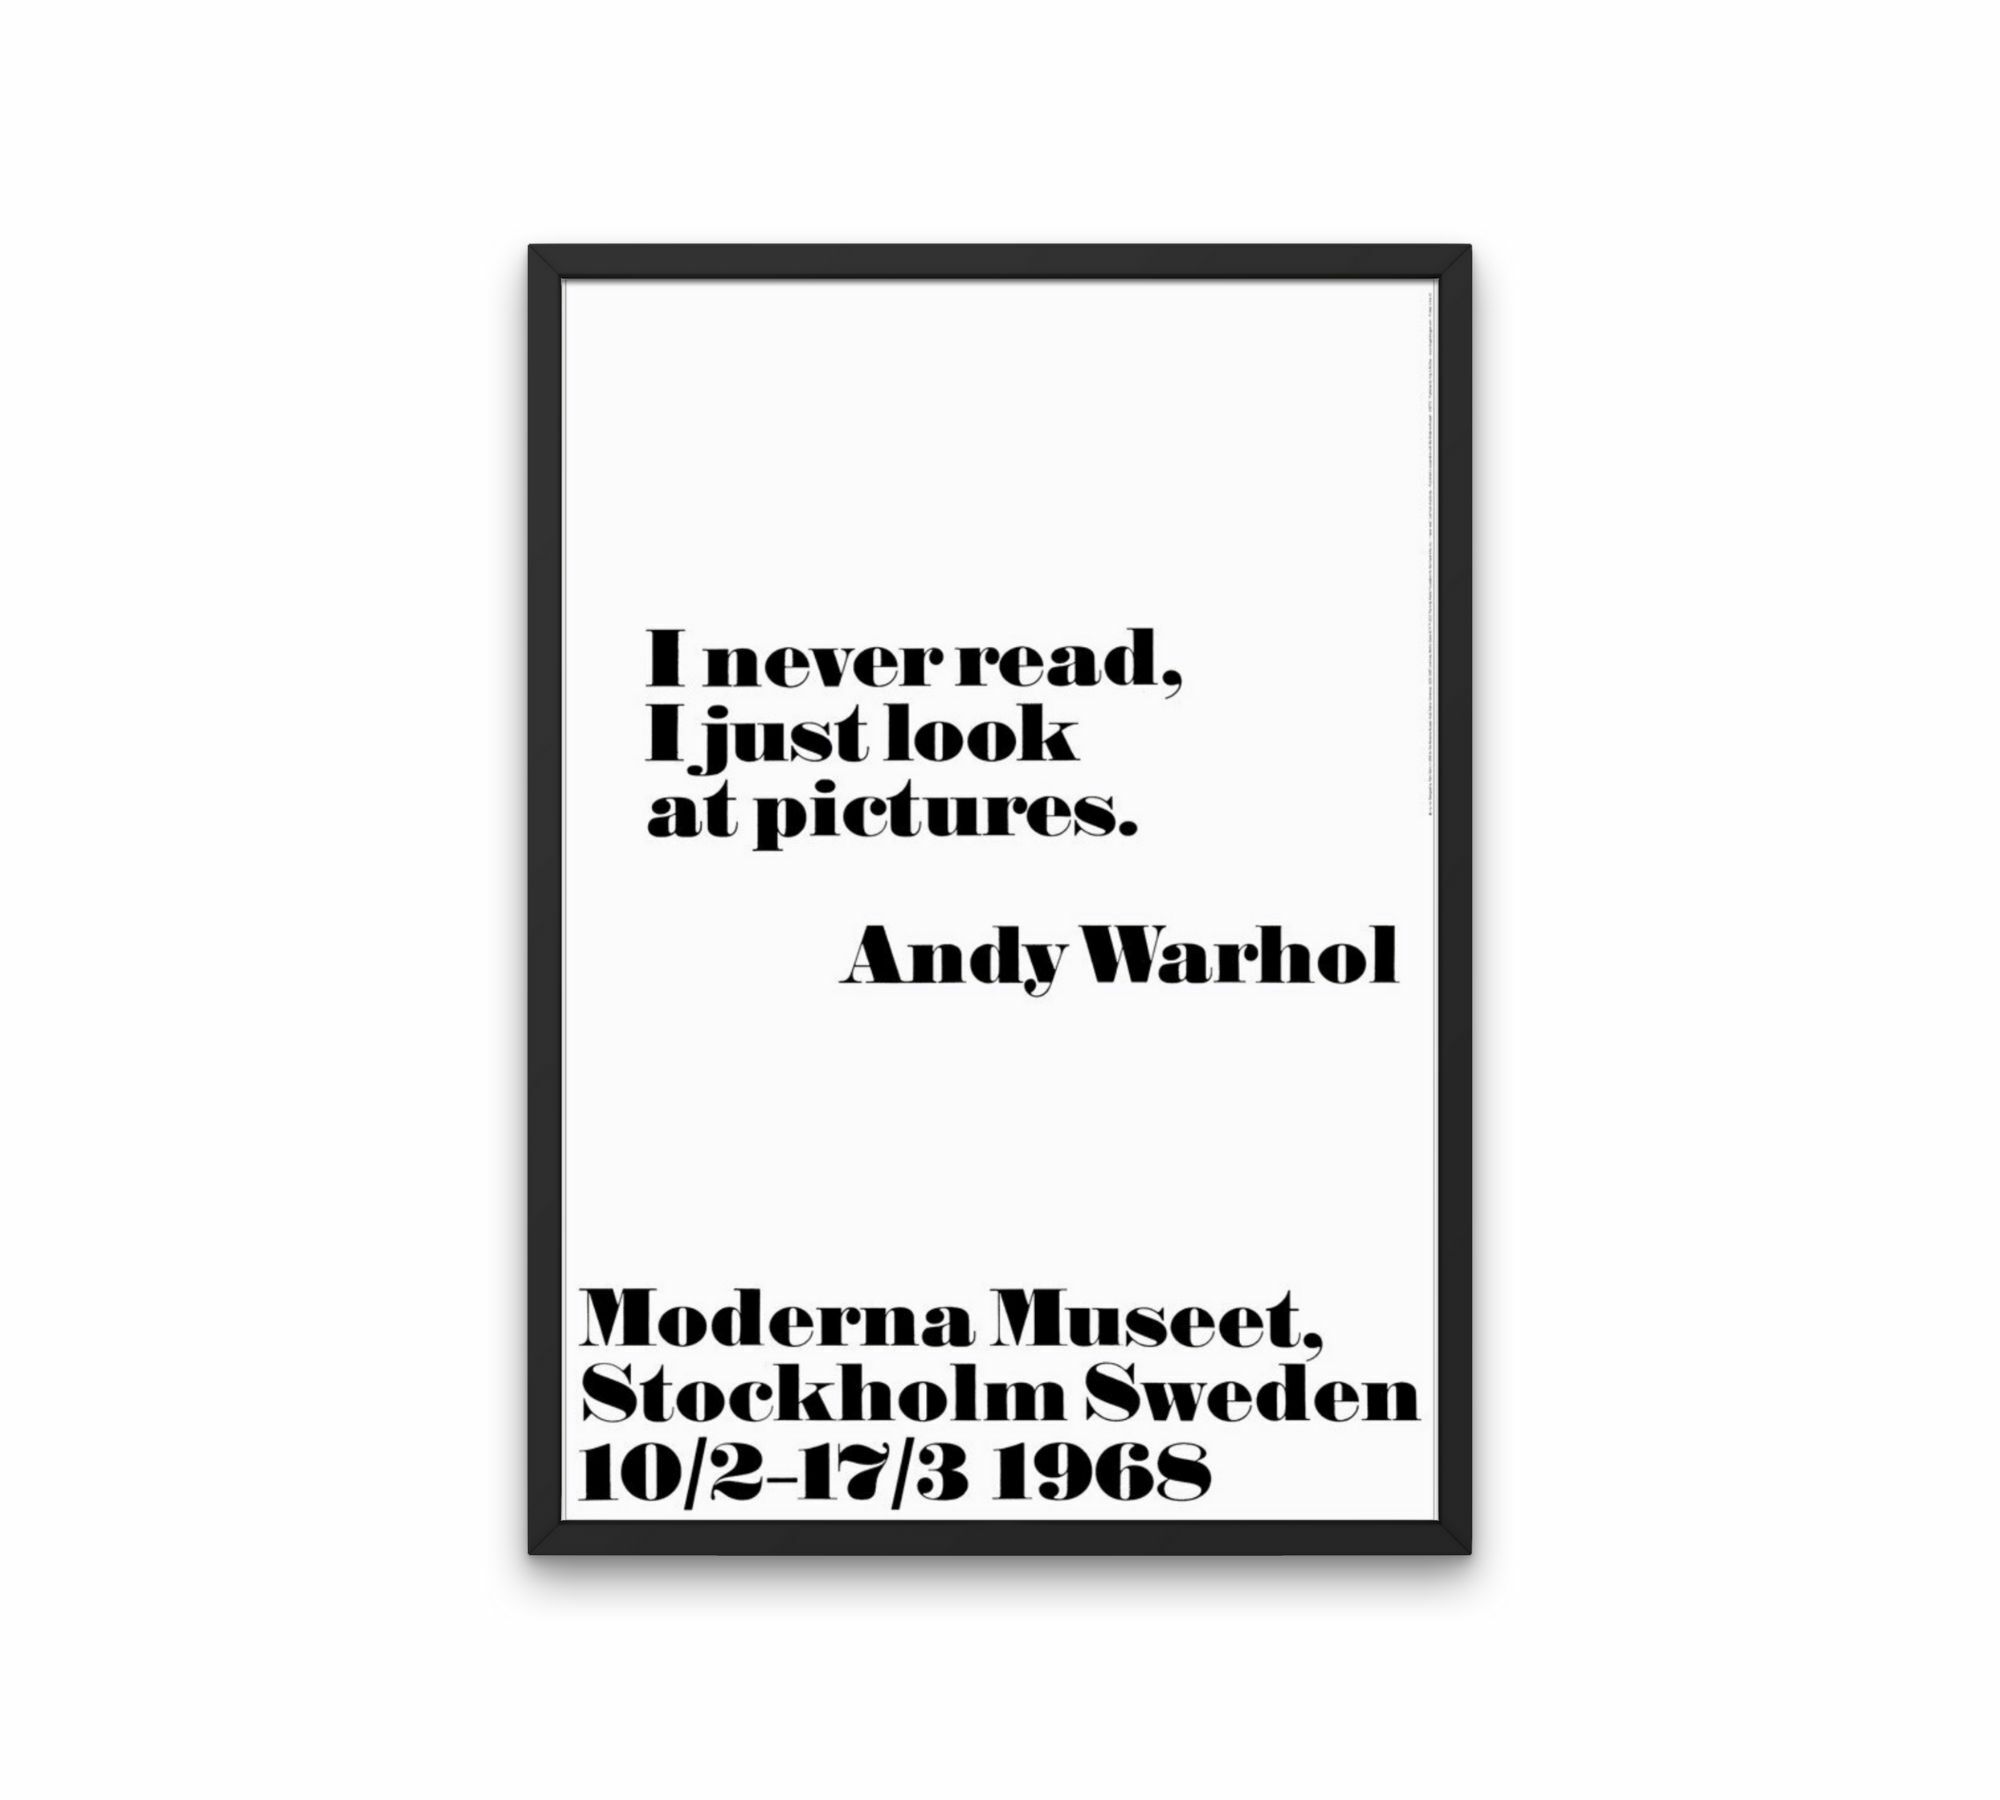 I never read - Andy Warhol 70 x 100 cm 3